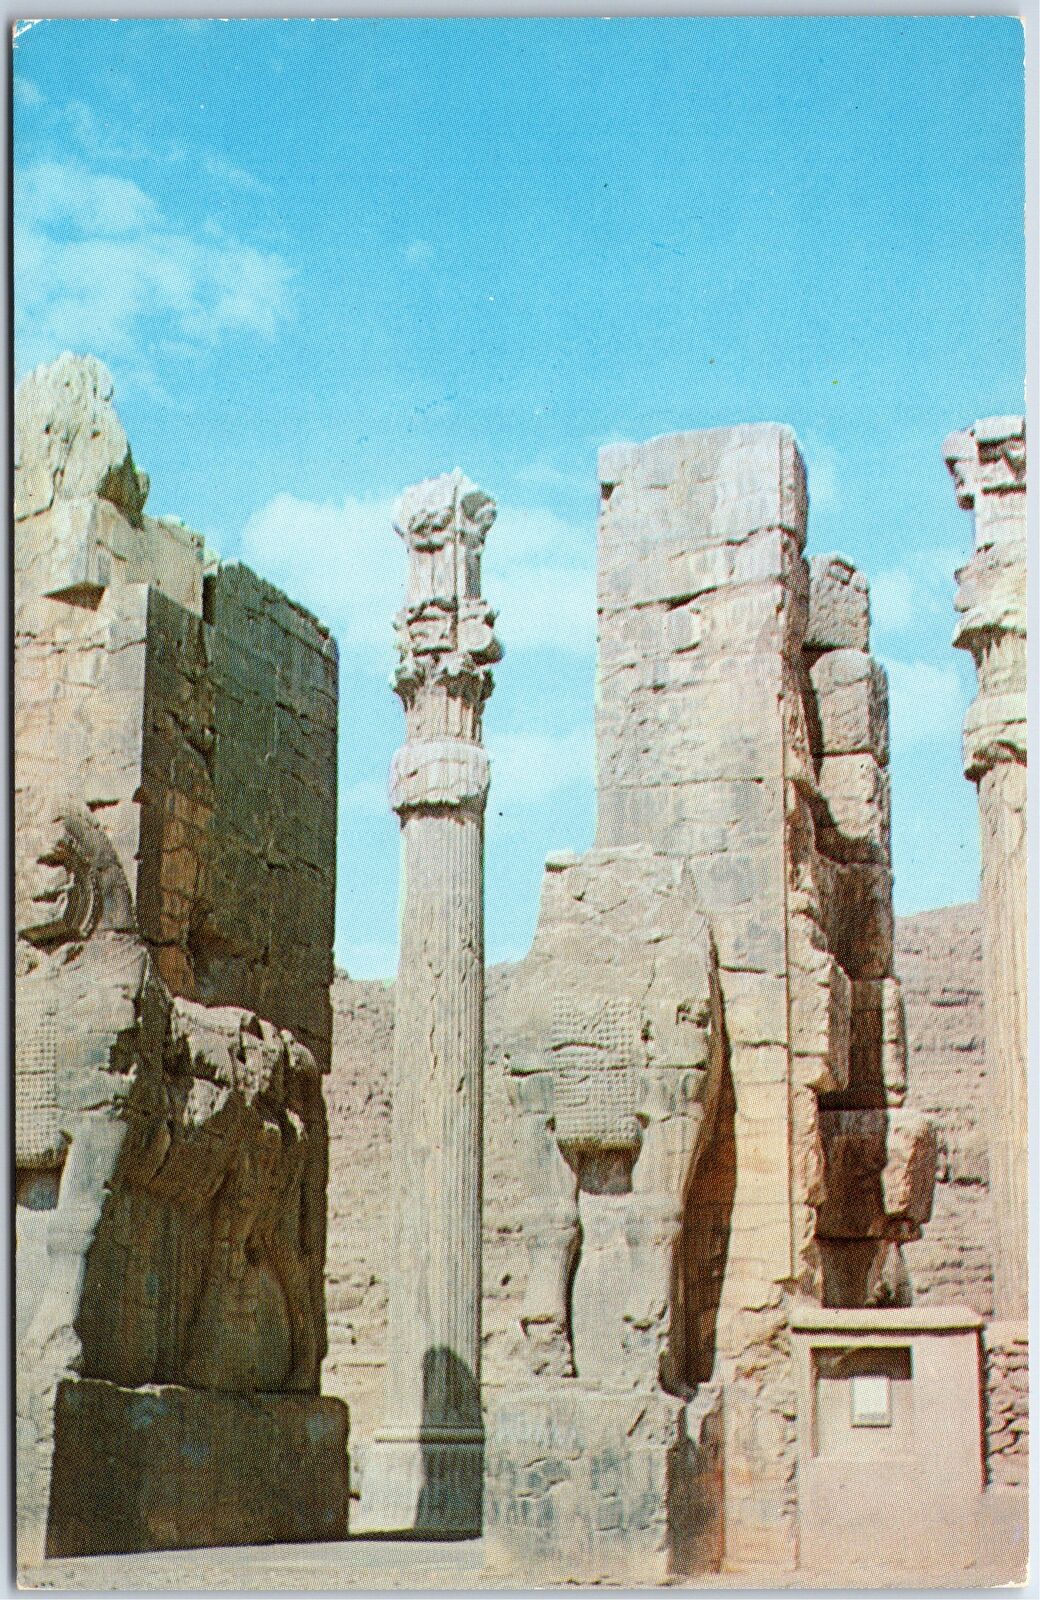 VINTAGE POSTCARD THE PERSEPOLIS RUINS AT SHIRAZ PERSIA c. 1960s